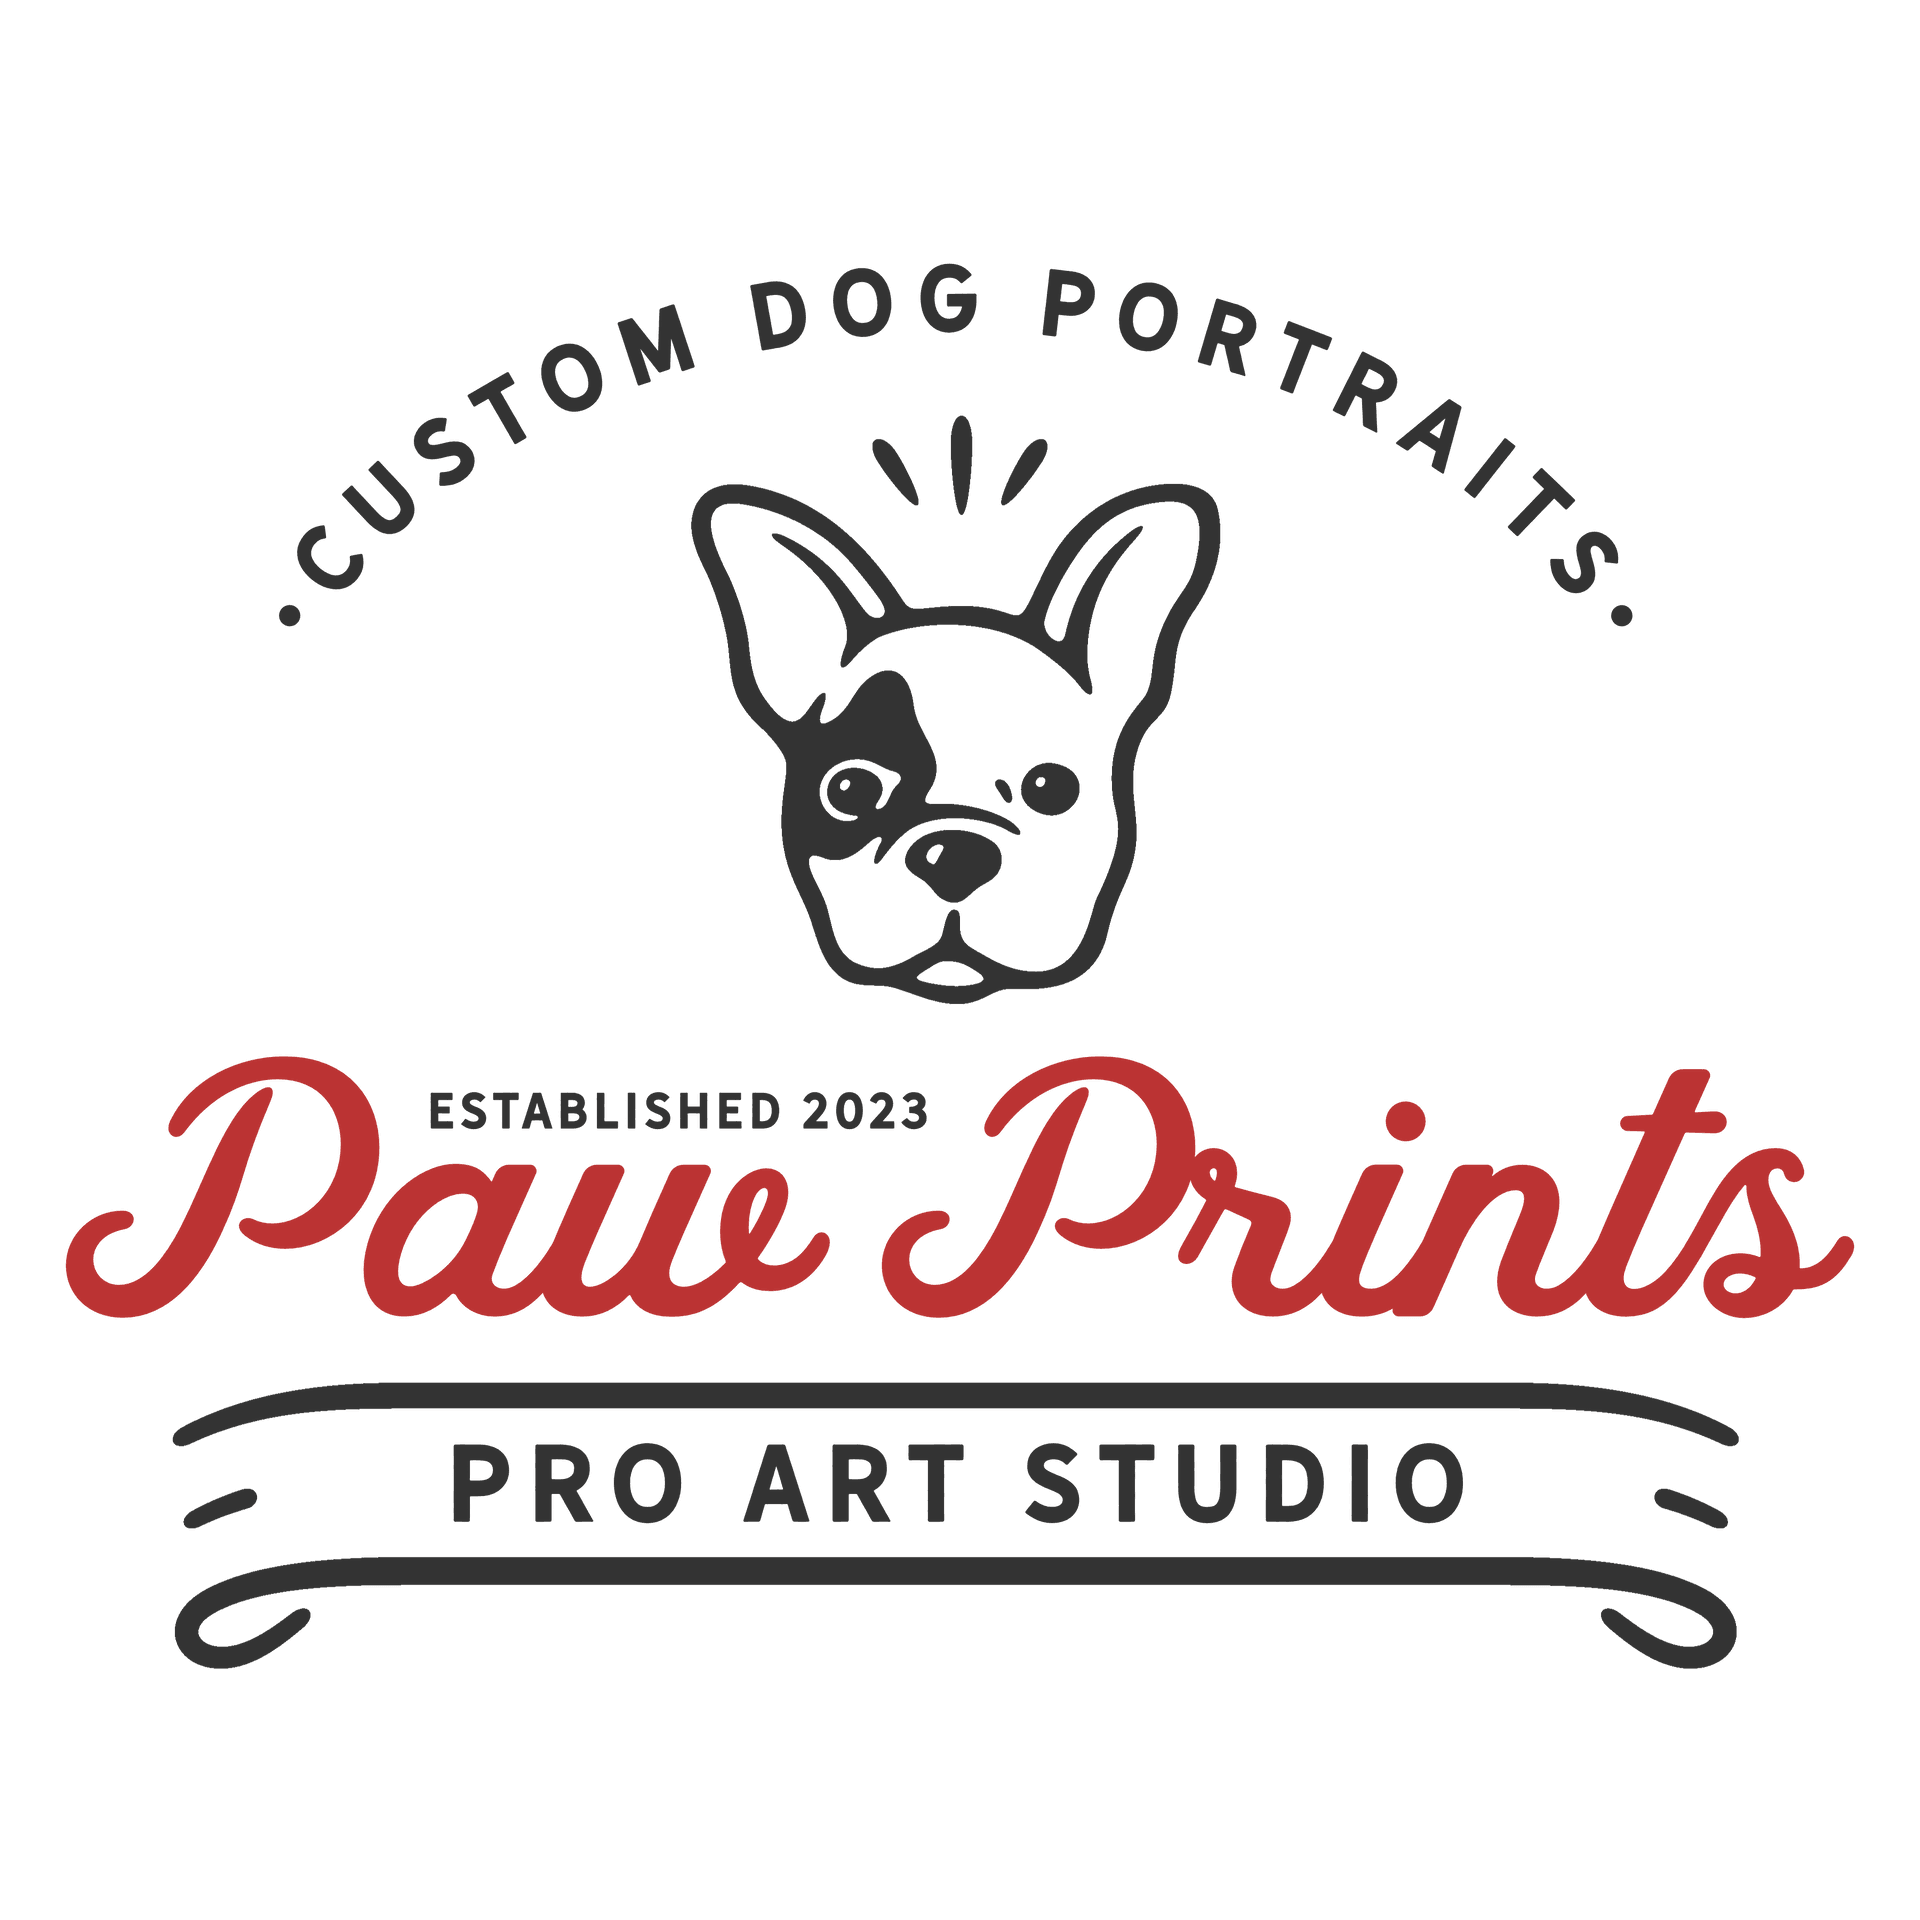 Paw Prints Pro Art Studio